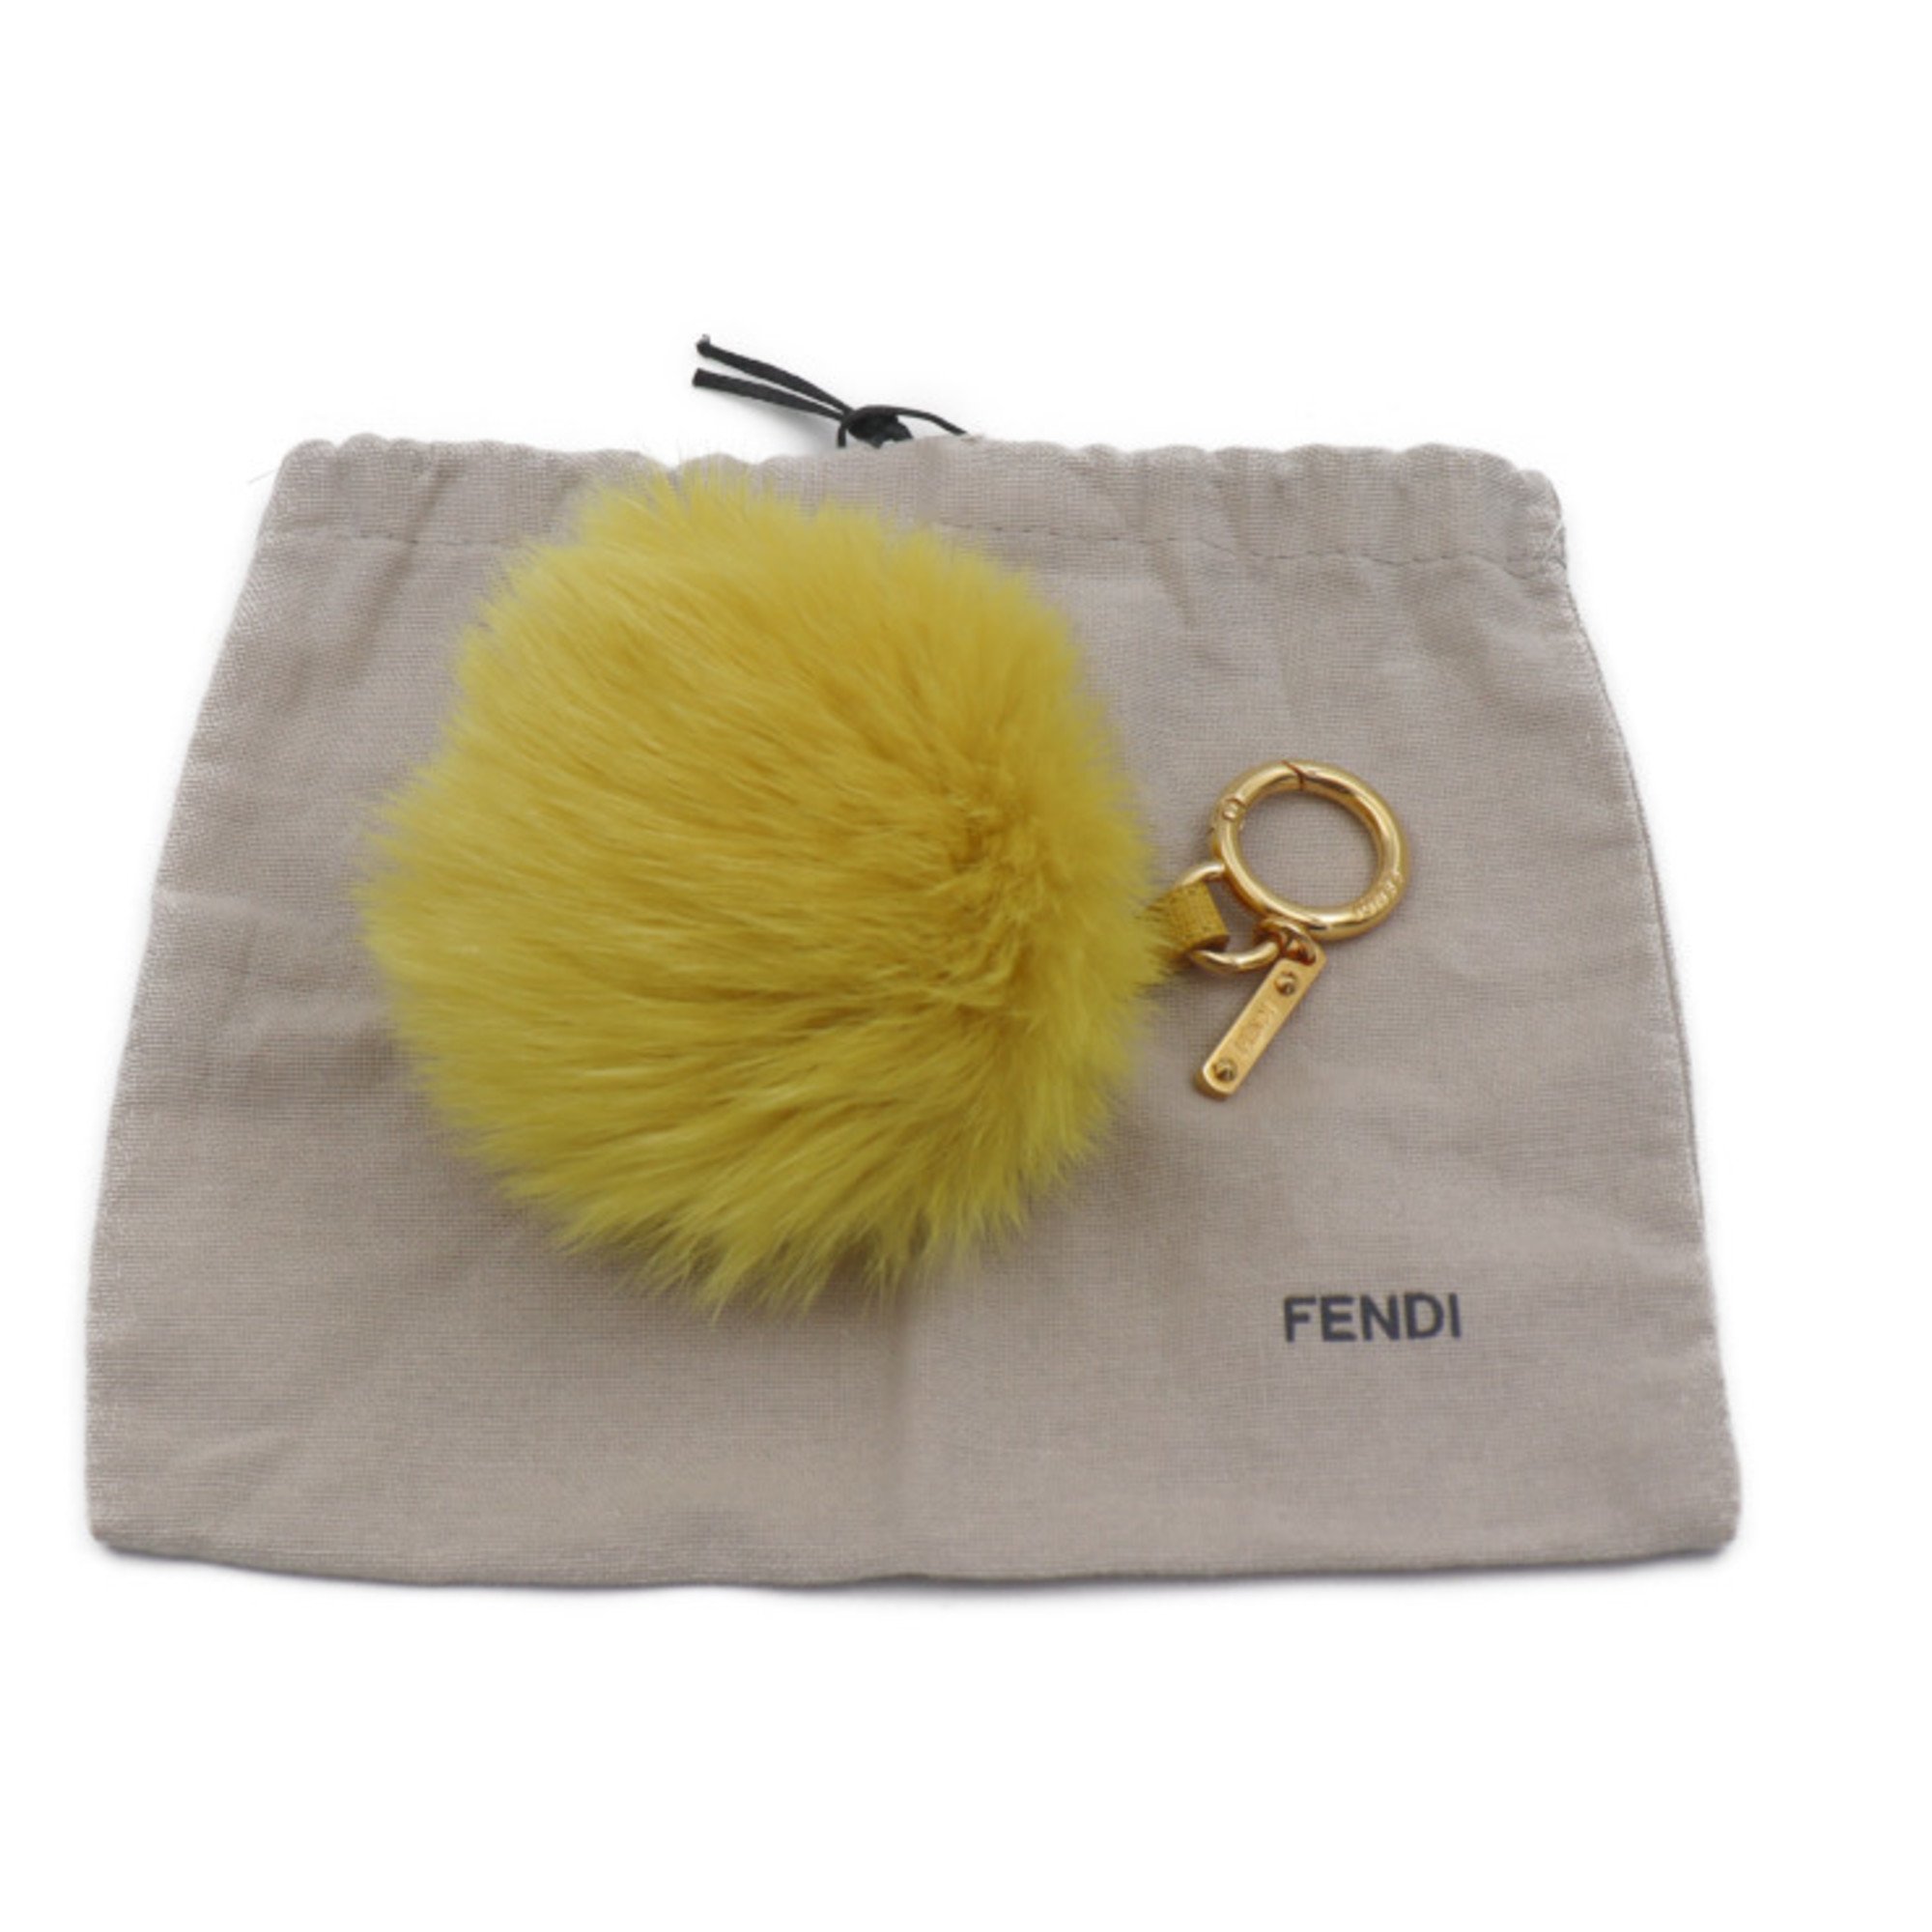 FENDI Fendi Other Accessories Fox Fur Yellow Gold Hardware Pompom Bag Charm Key Ring